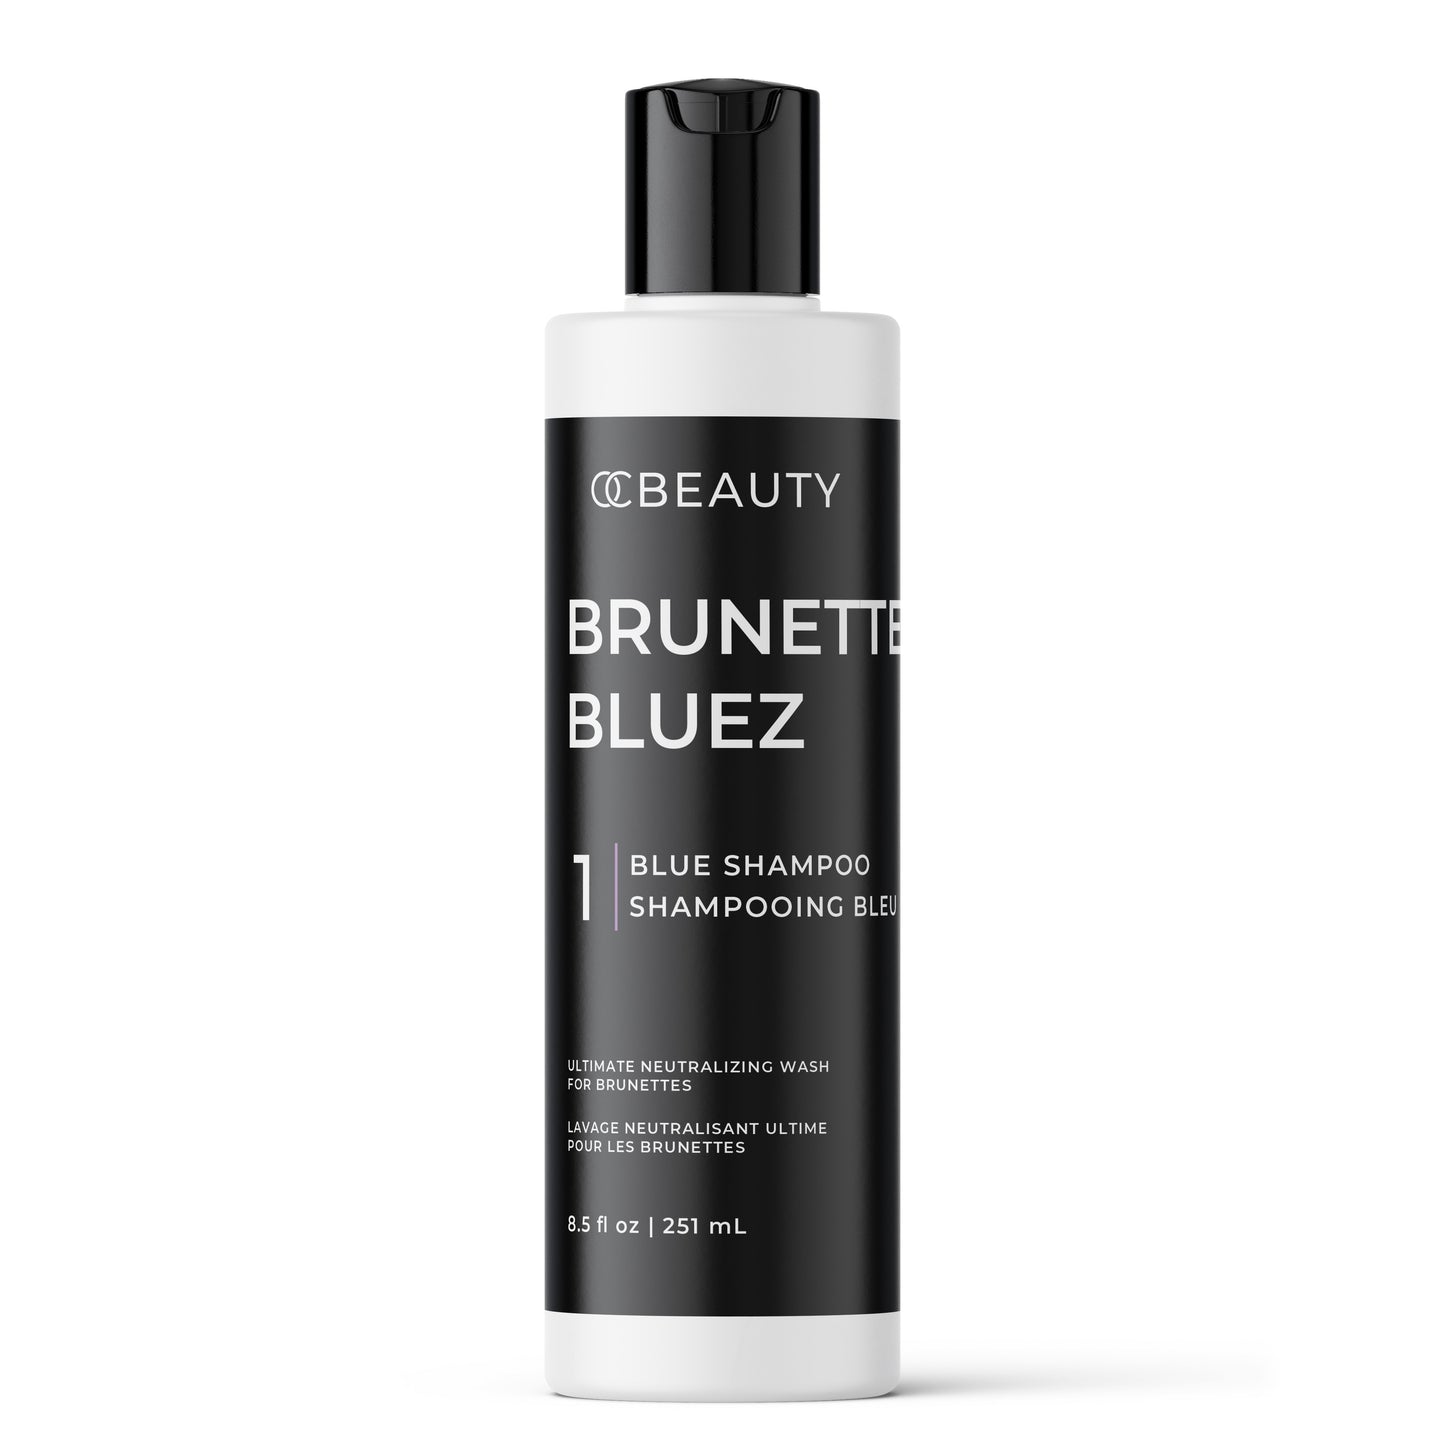 Brunette Bluez Shampoo